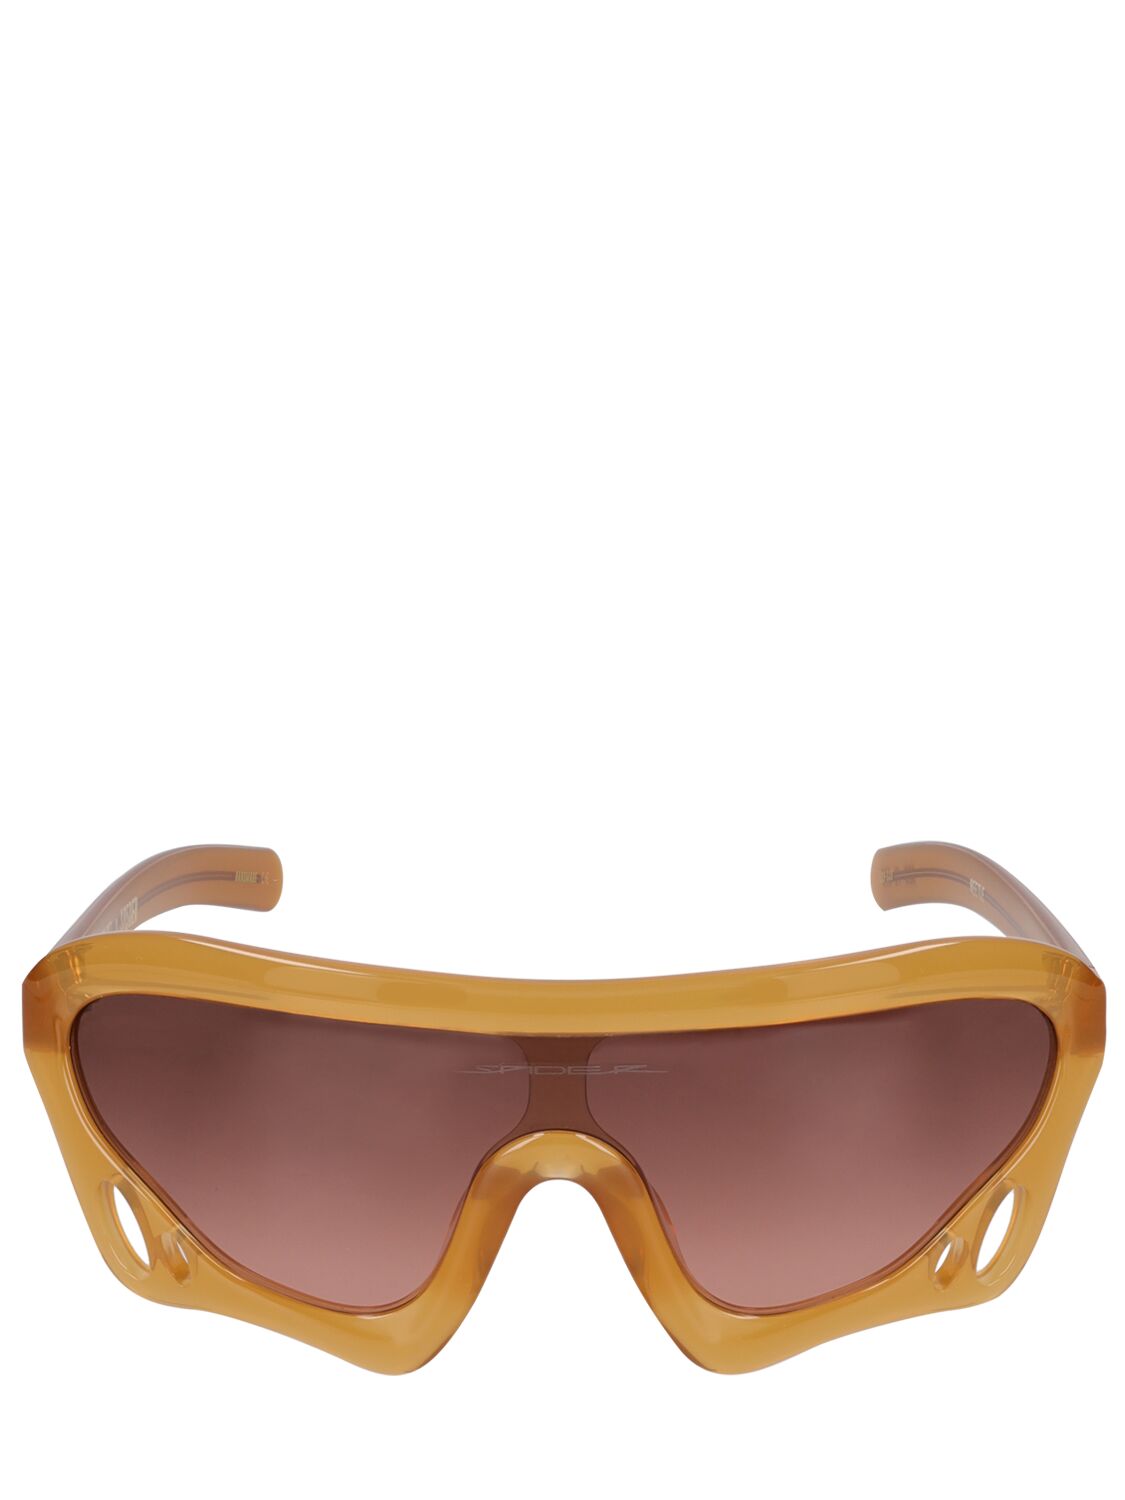 Flatlist Eyewear Spider Worldwide Beetle Sunglasses In Gold